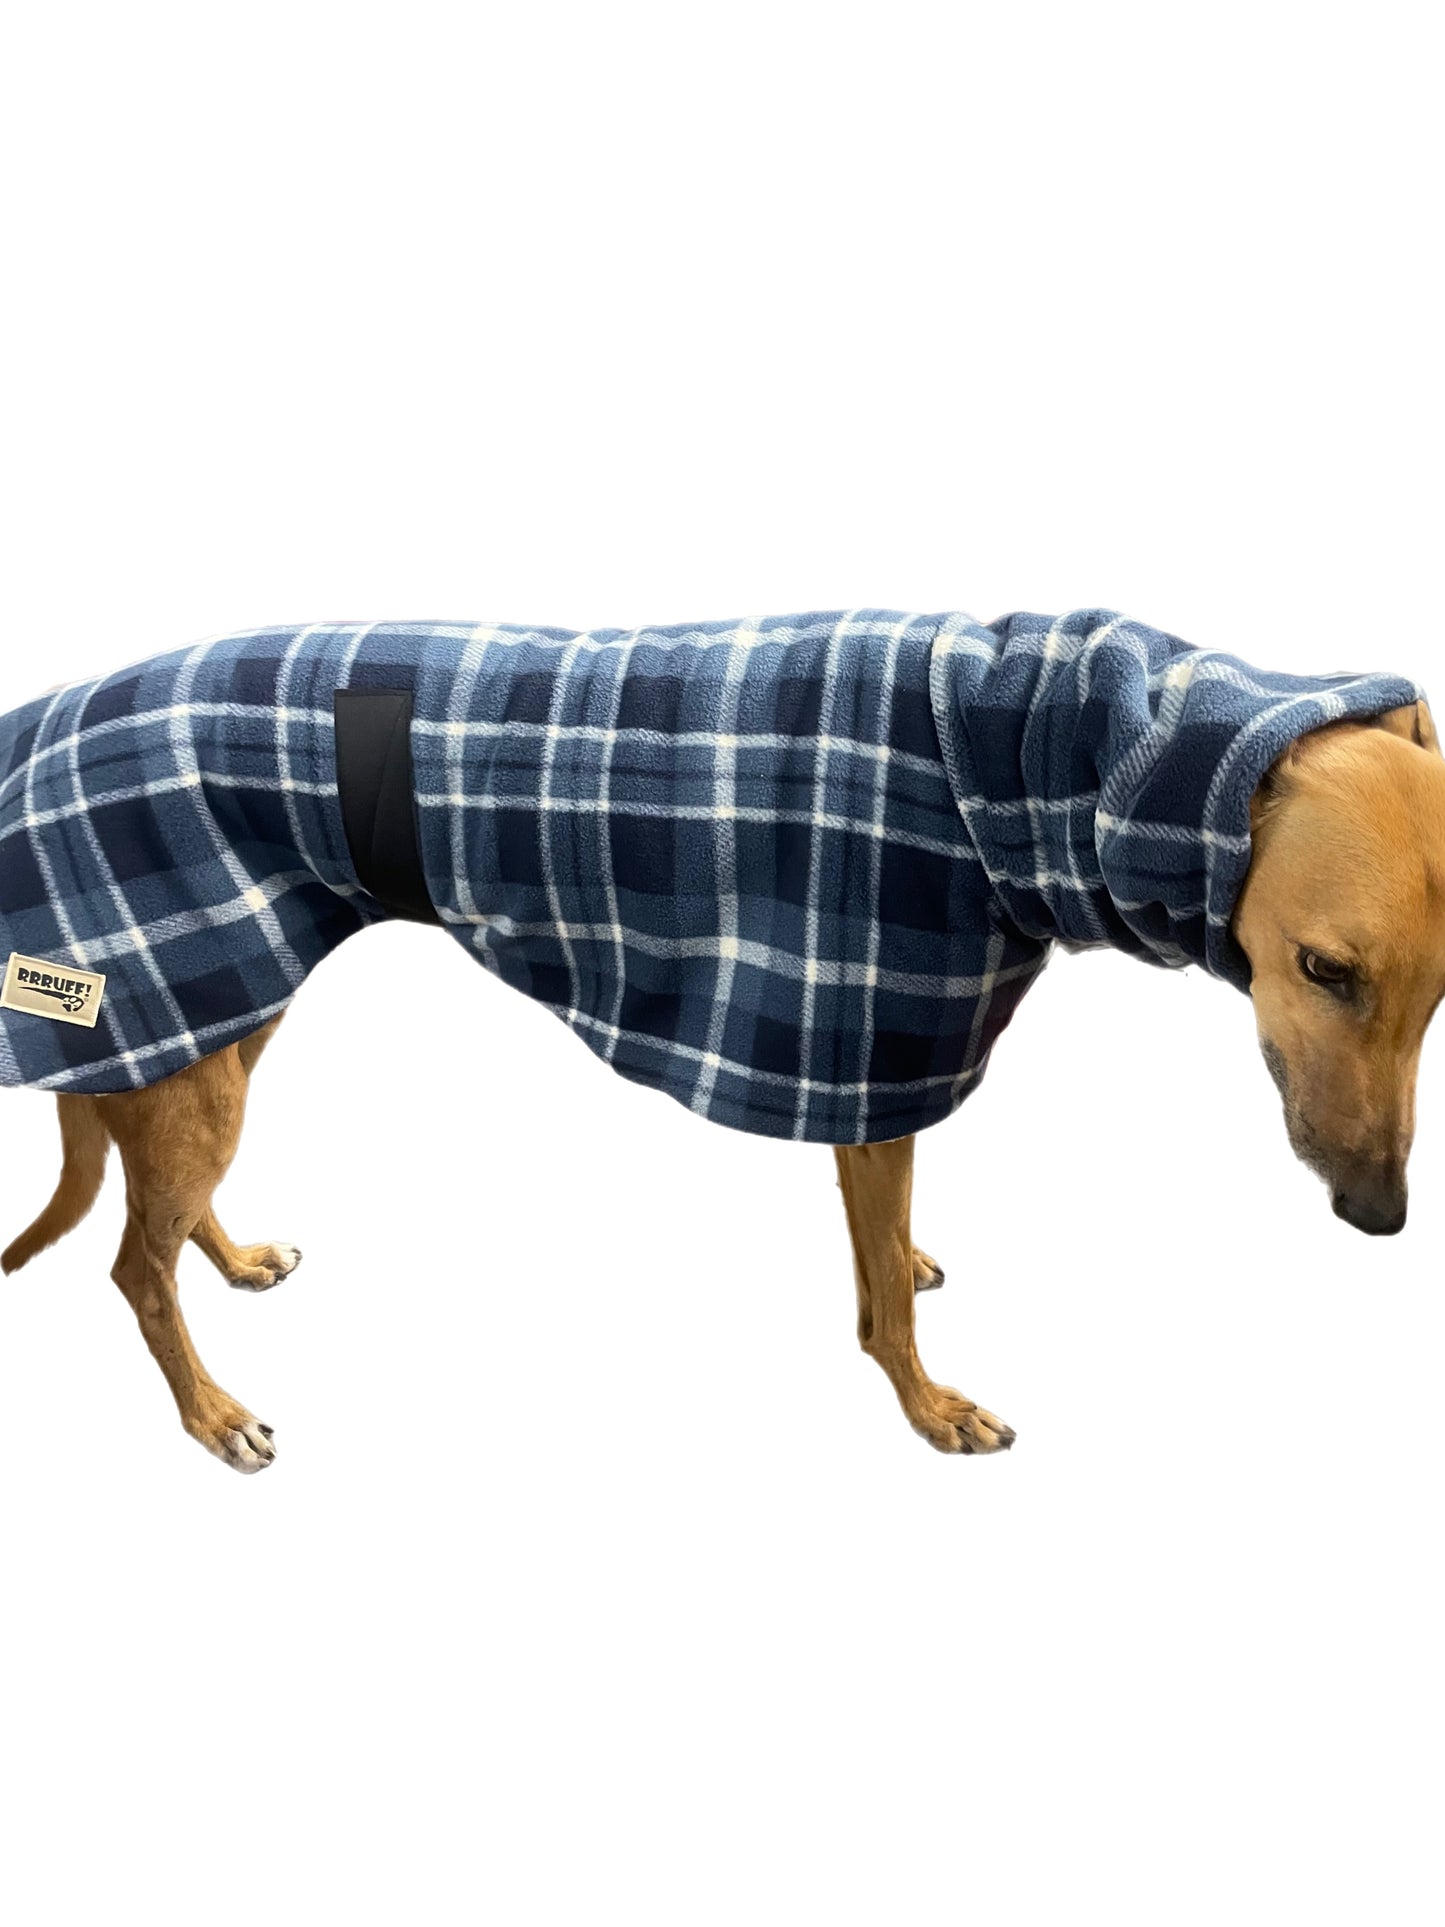 The navy blue Lumberjack Greyhound coat in deluxe style rug navy blue black tartan check  polar fleece washable extra wide neck